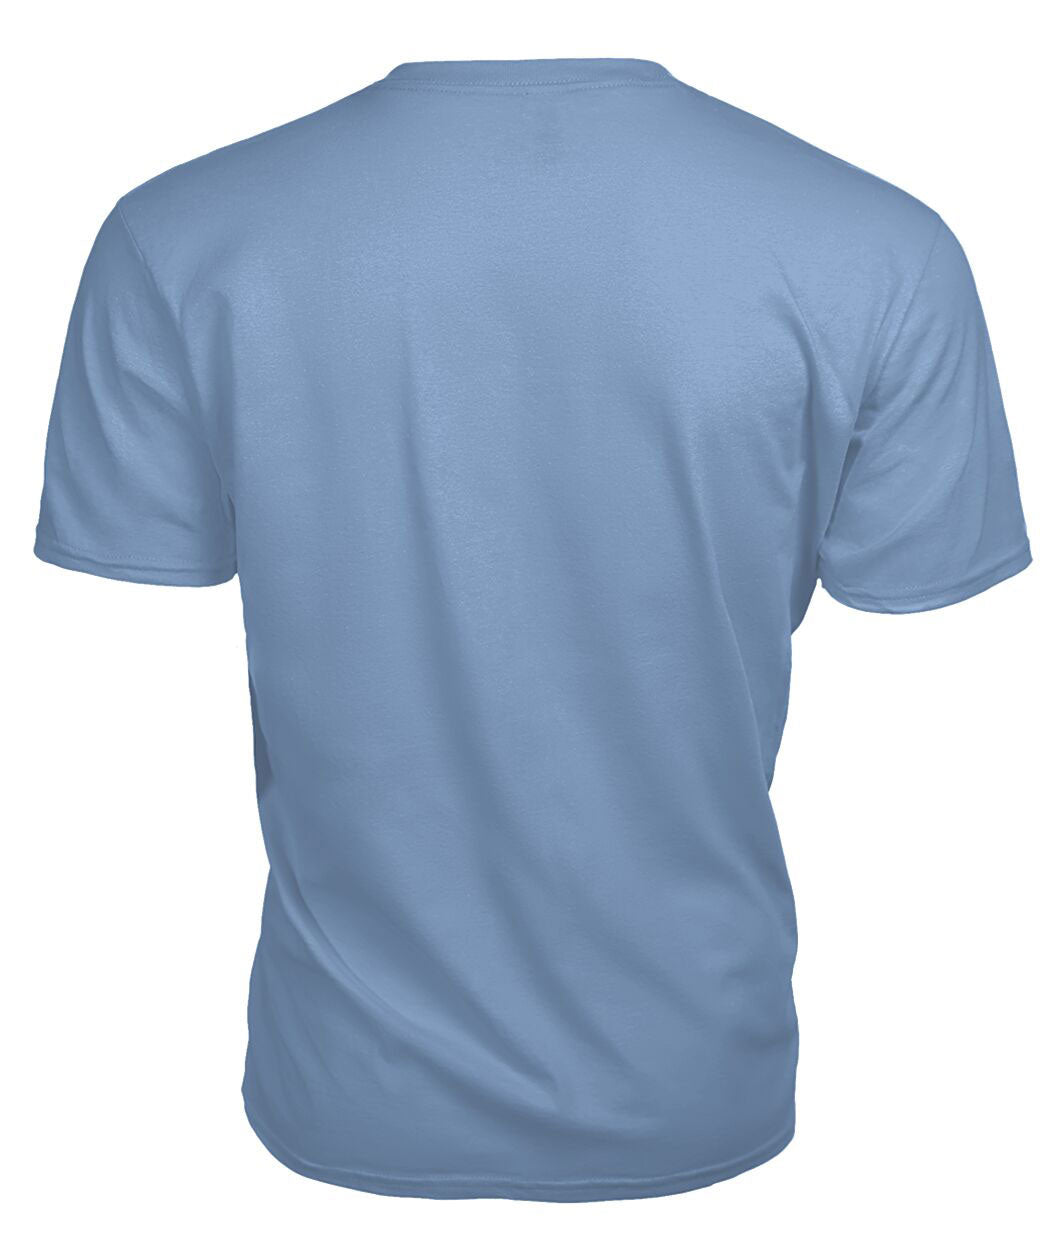 Straiton Tartan Crest 2D T-shirt - Blood Runs Through My Veins Style